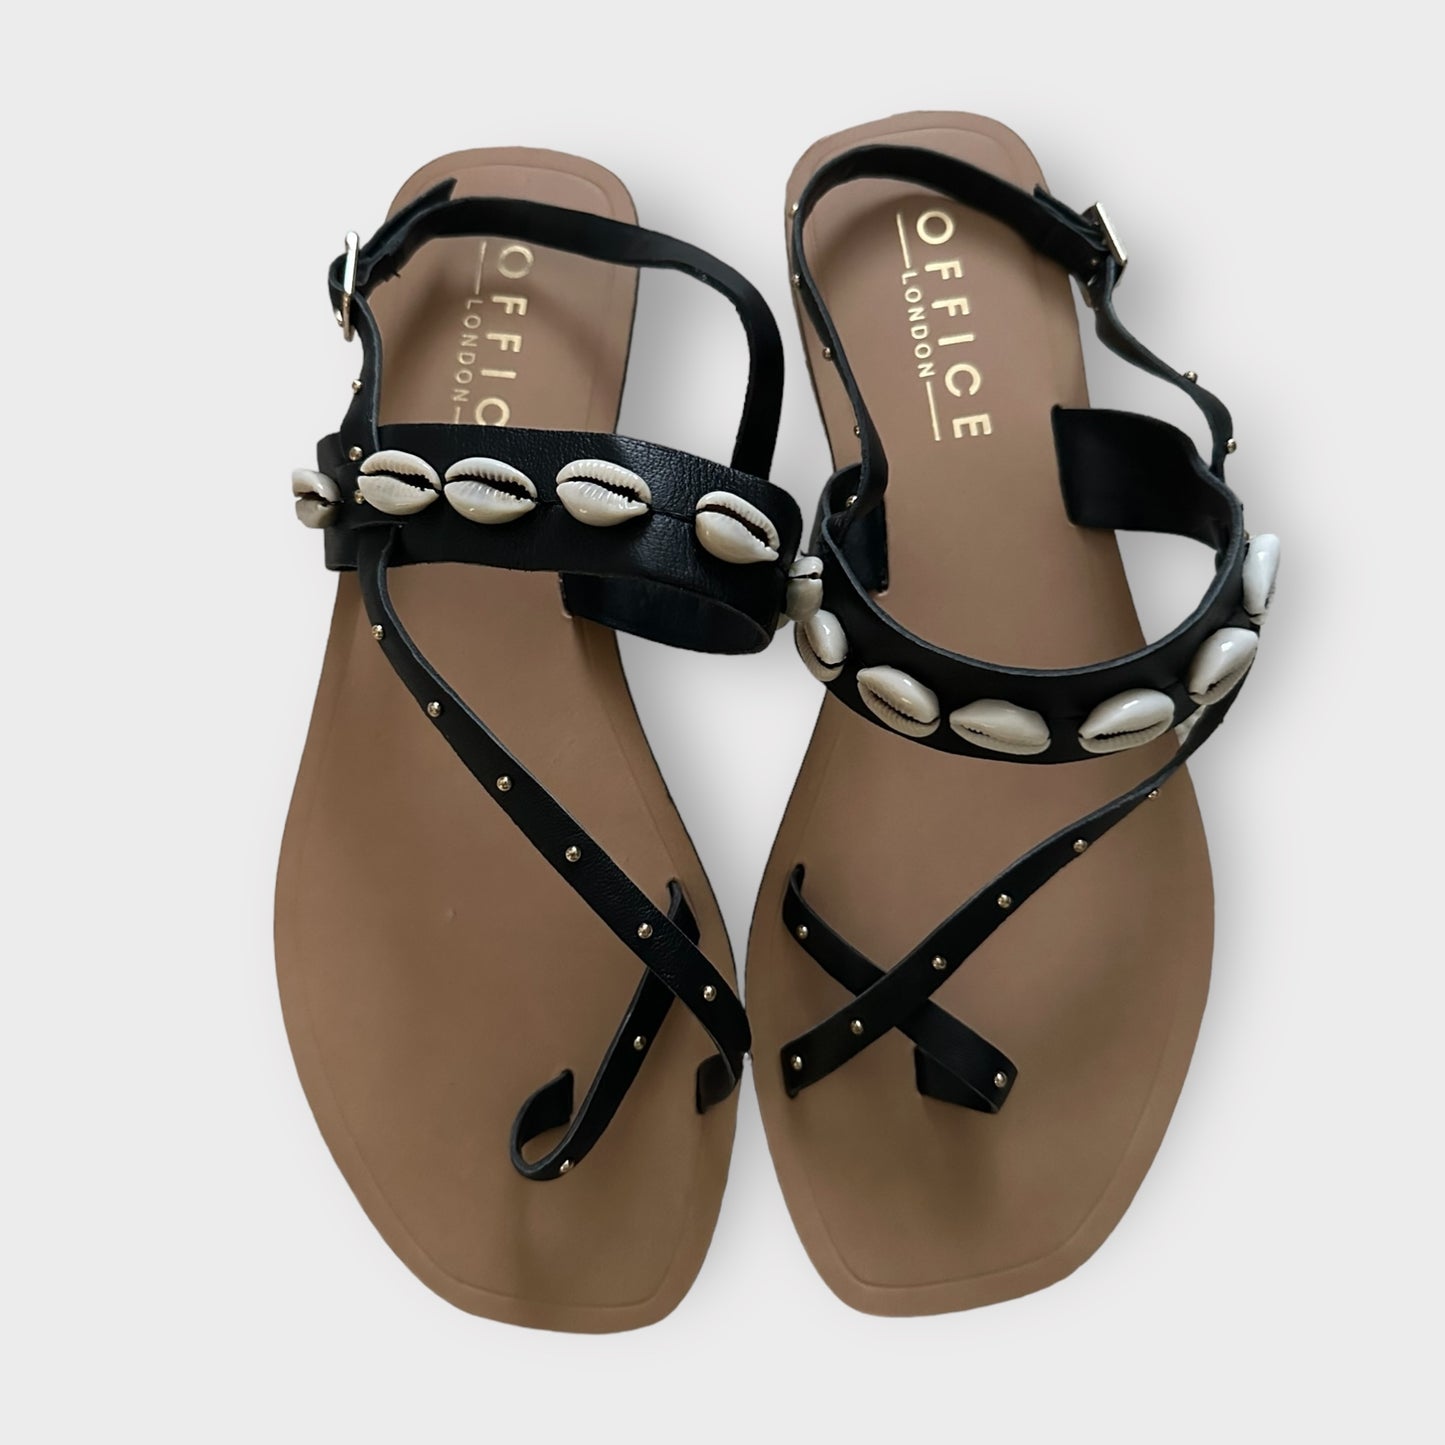 Office black hippy shell sandals flip flops leather shoes EU 40 UK 7 new bnwob